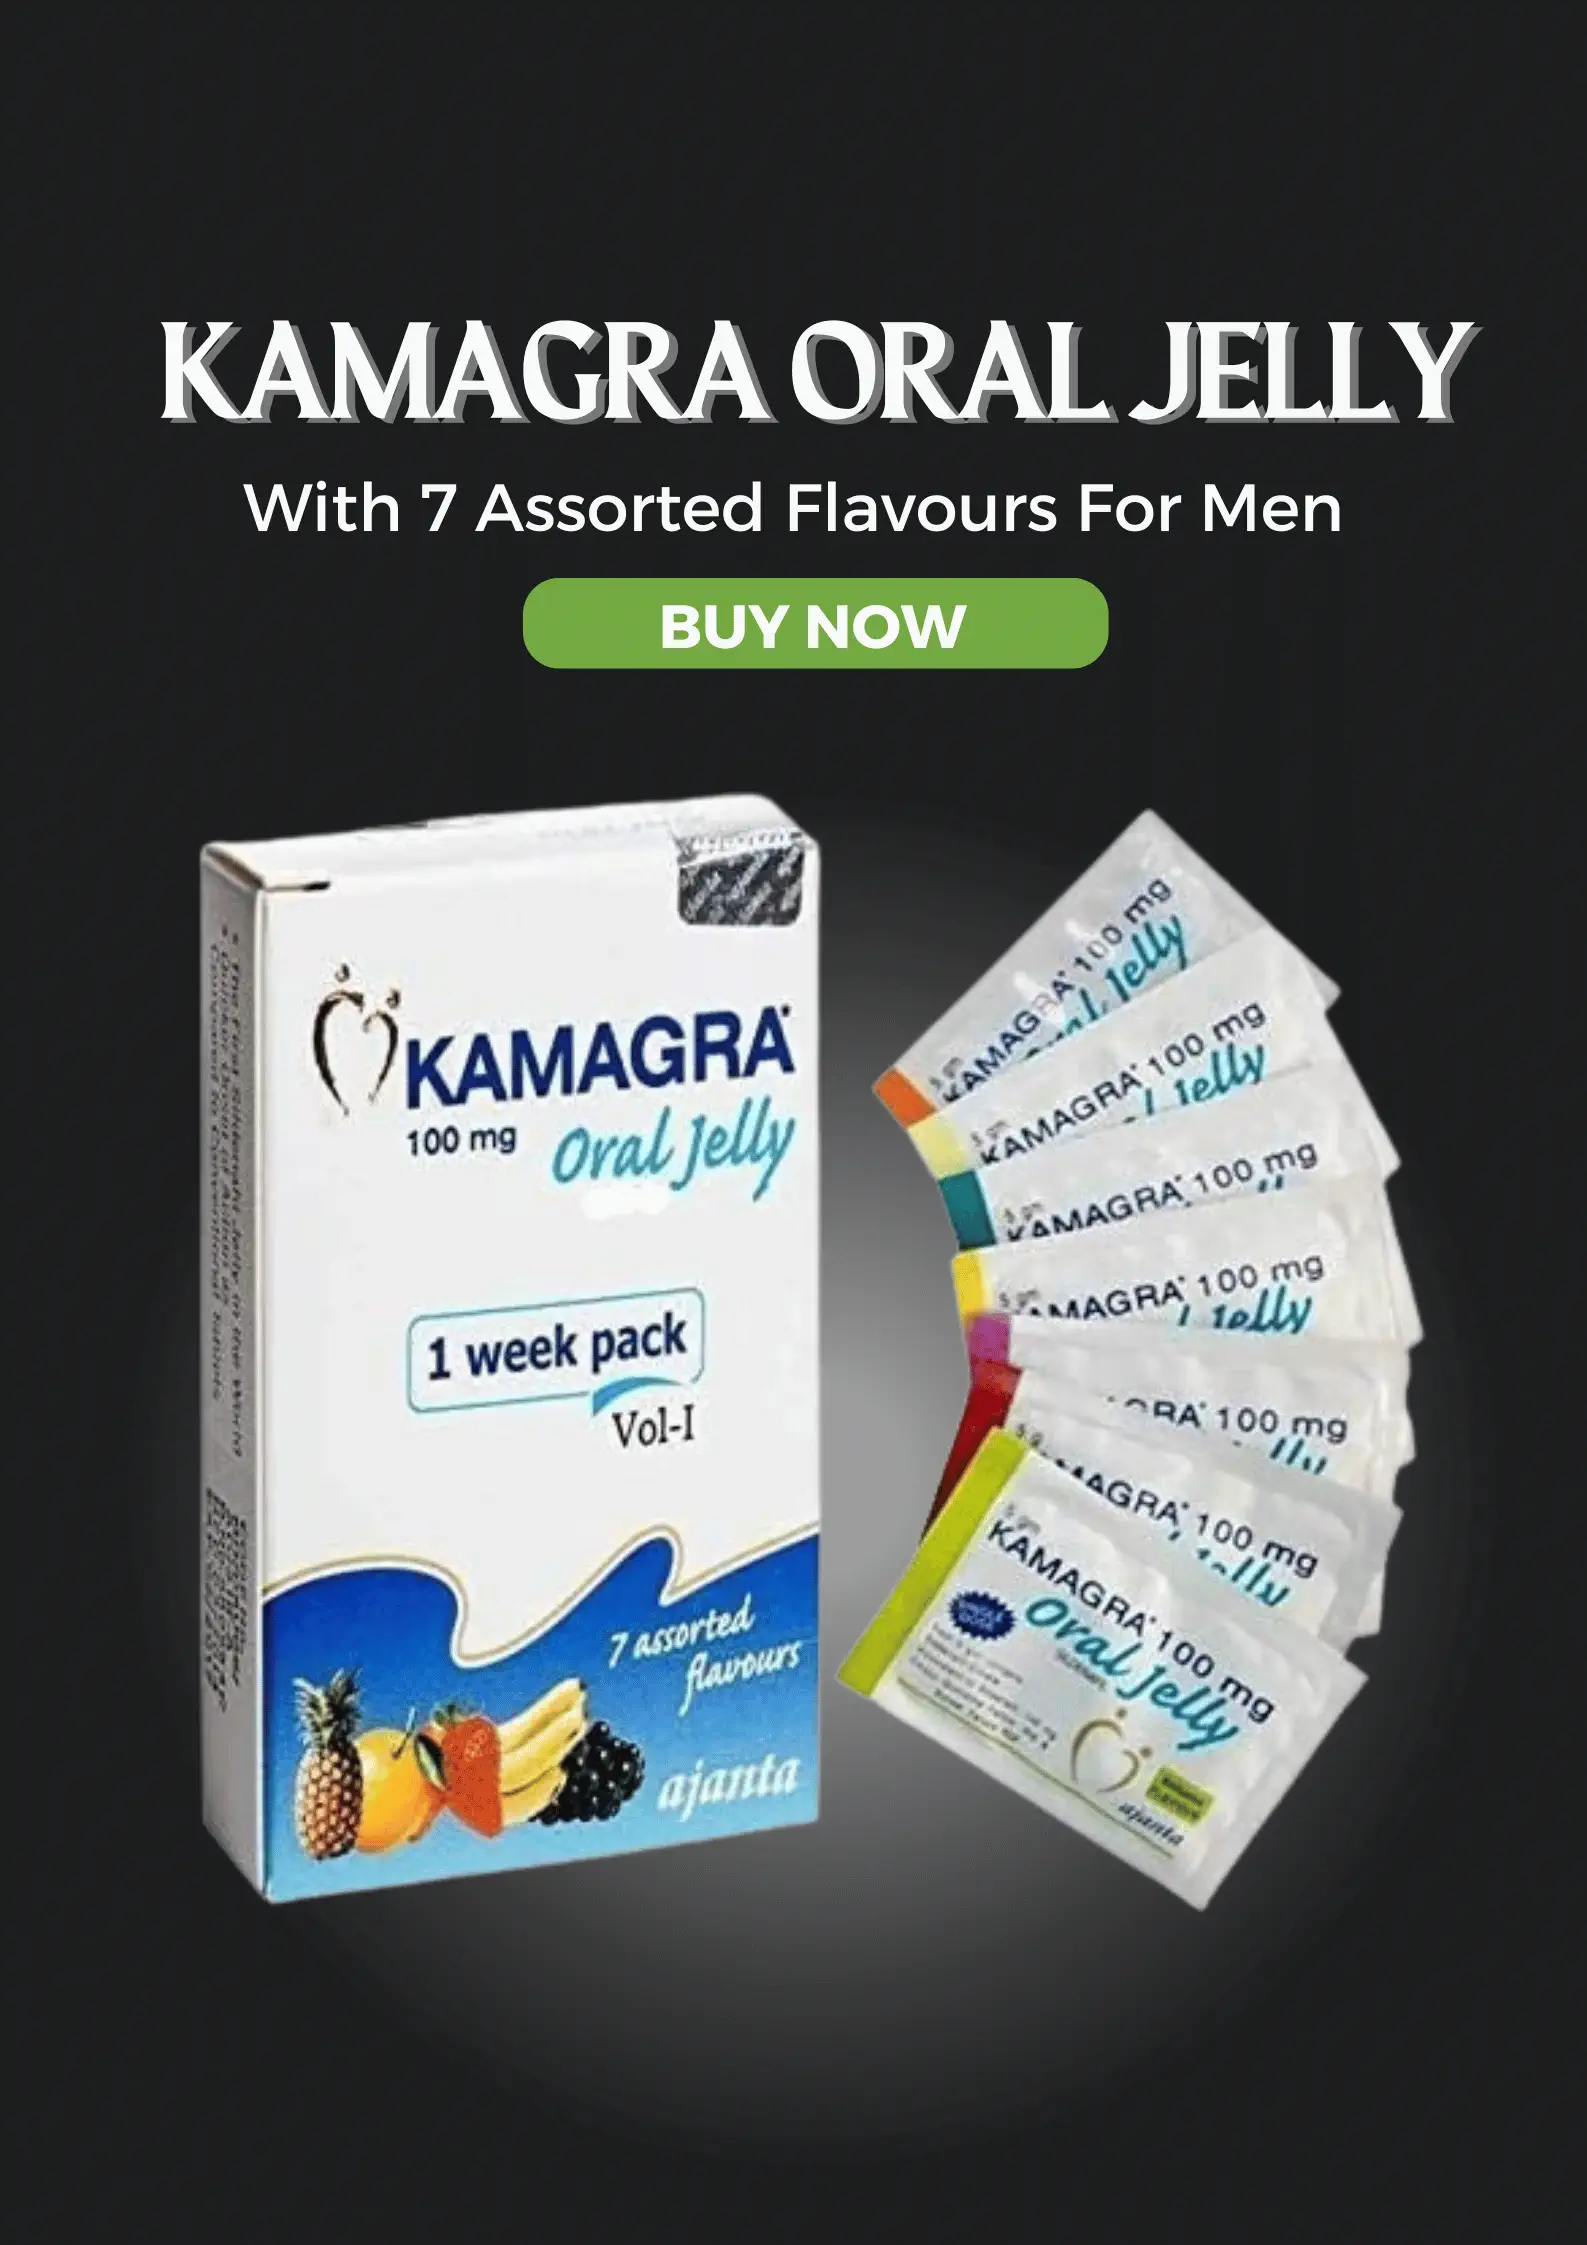 Kamagra-Oral-Jelly in uaE